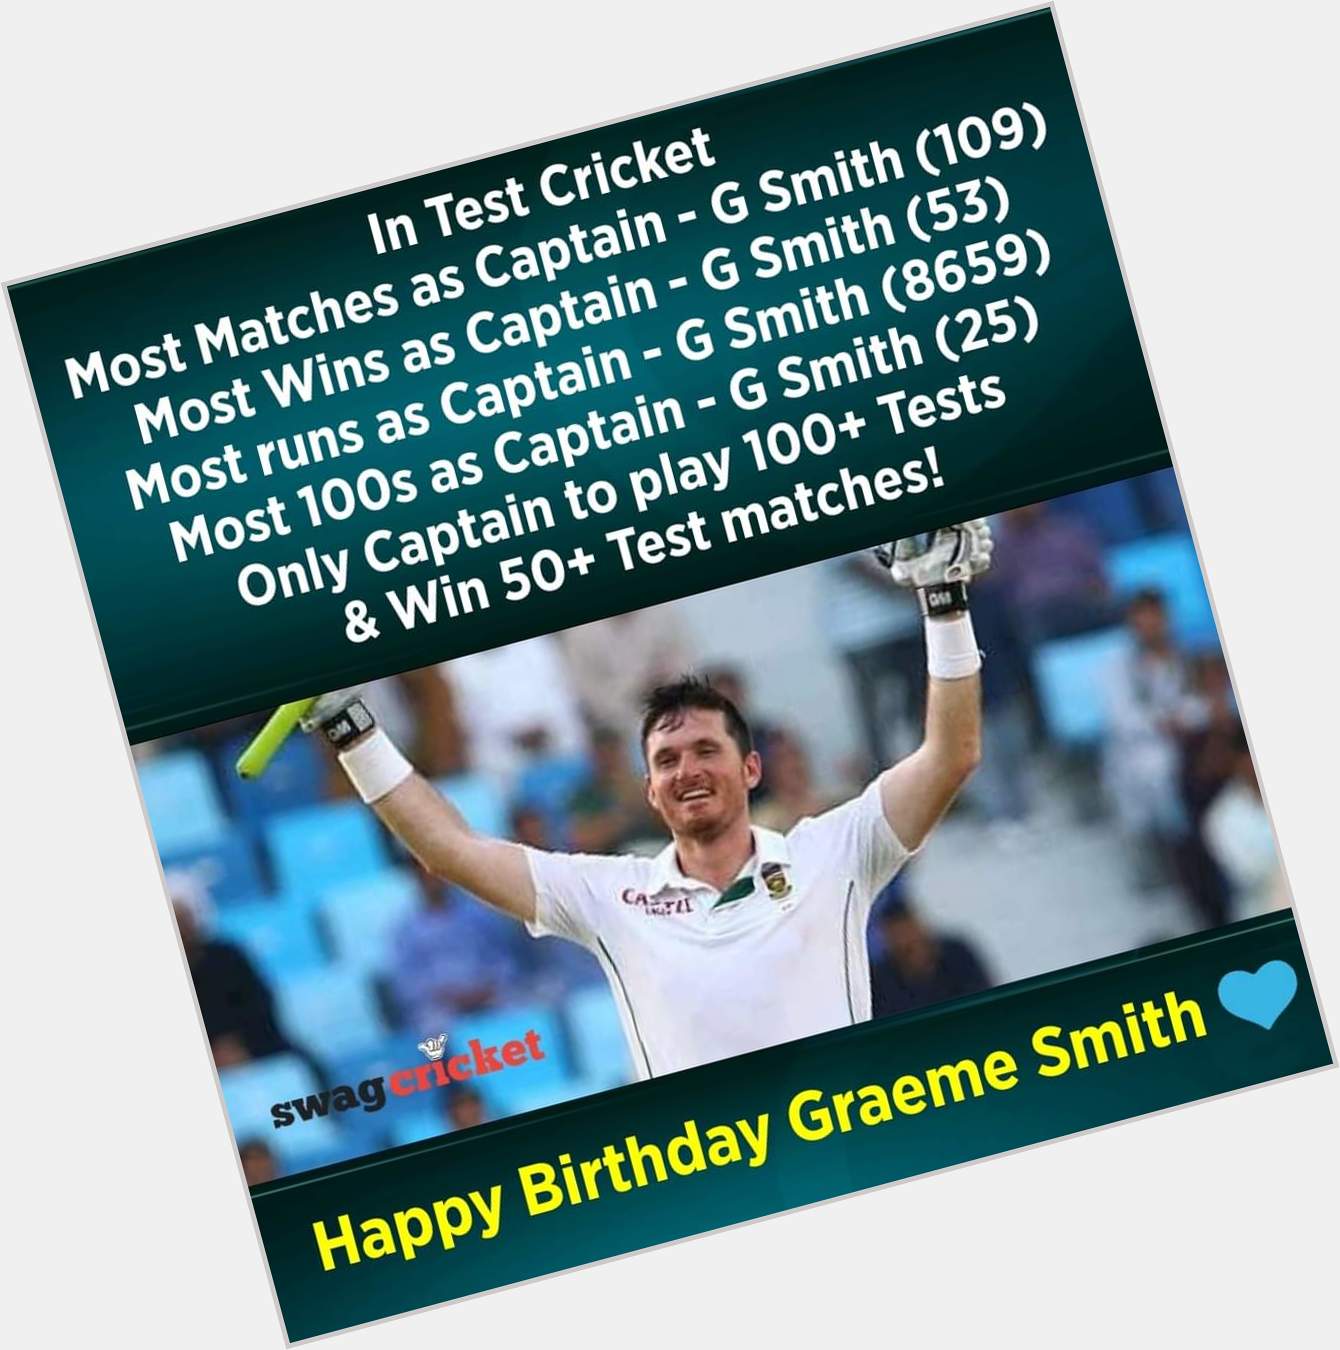 Happy Birthday Graeme Smith. 